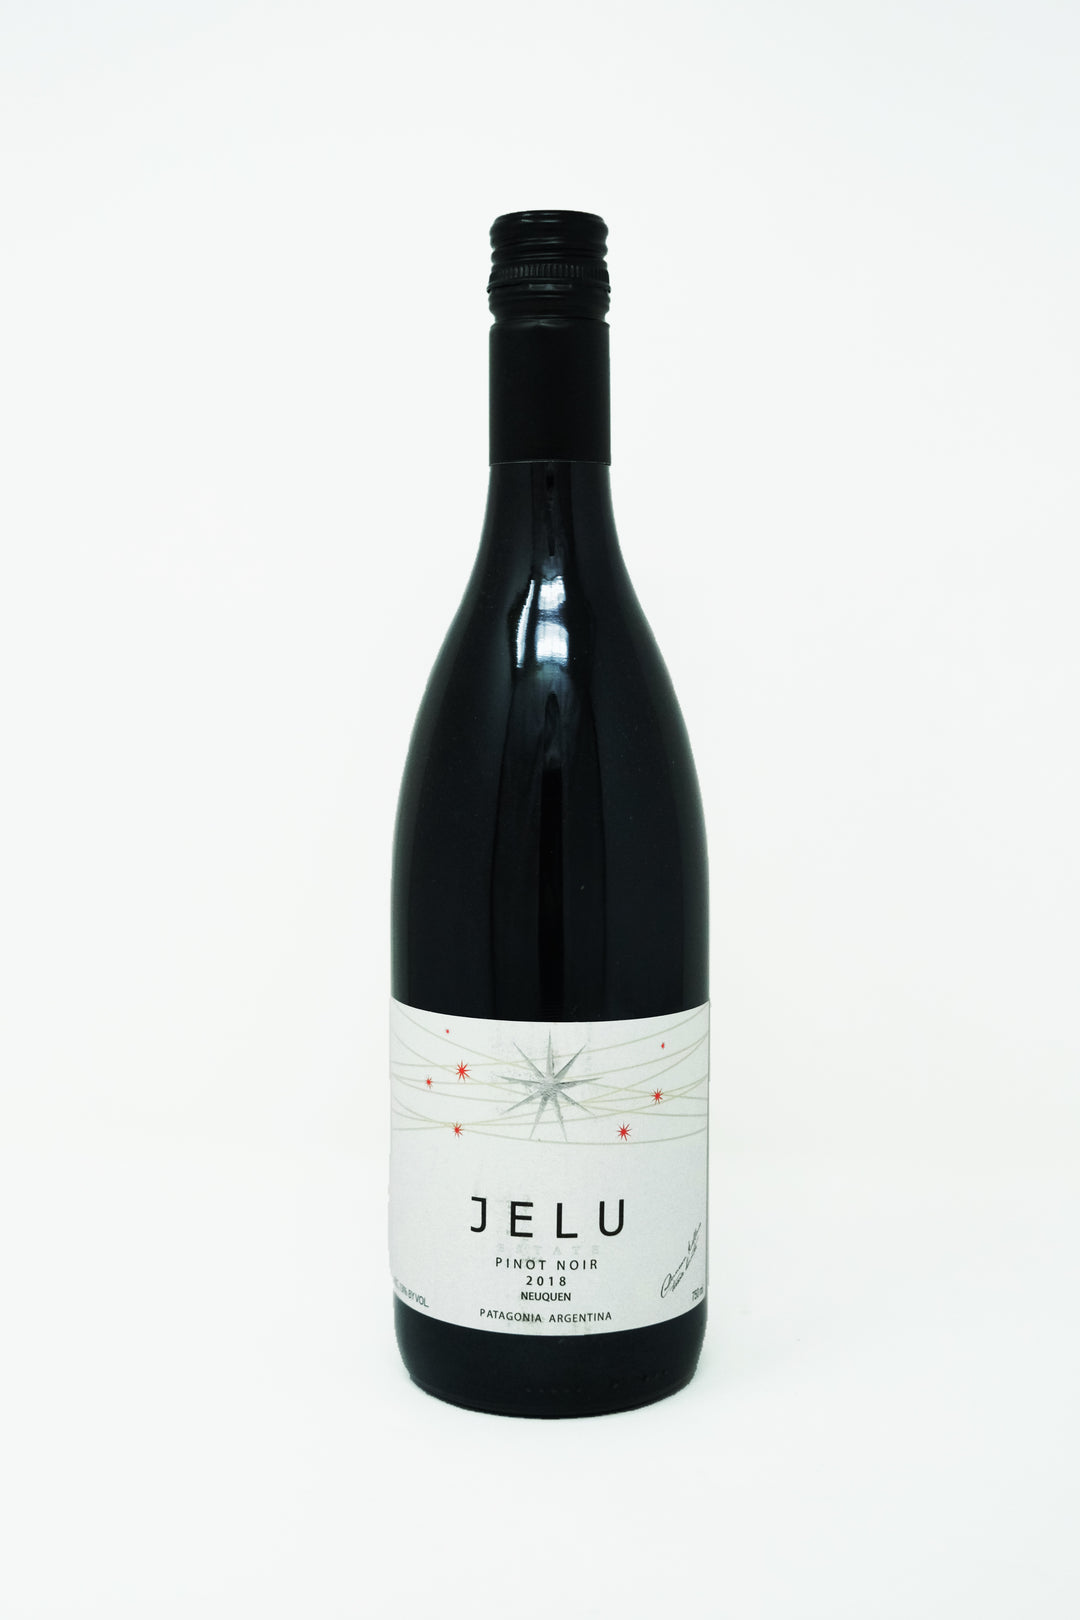 Jelu Pinot Noir 2018